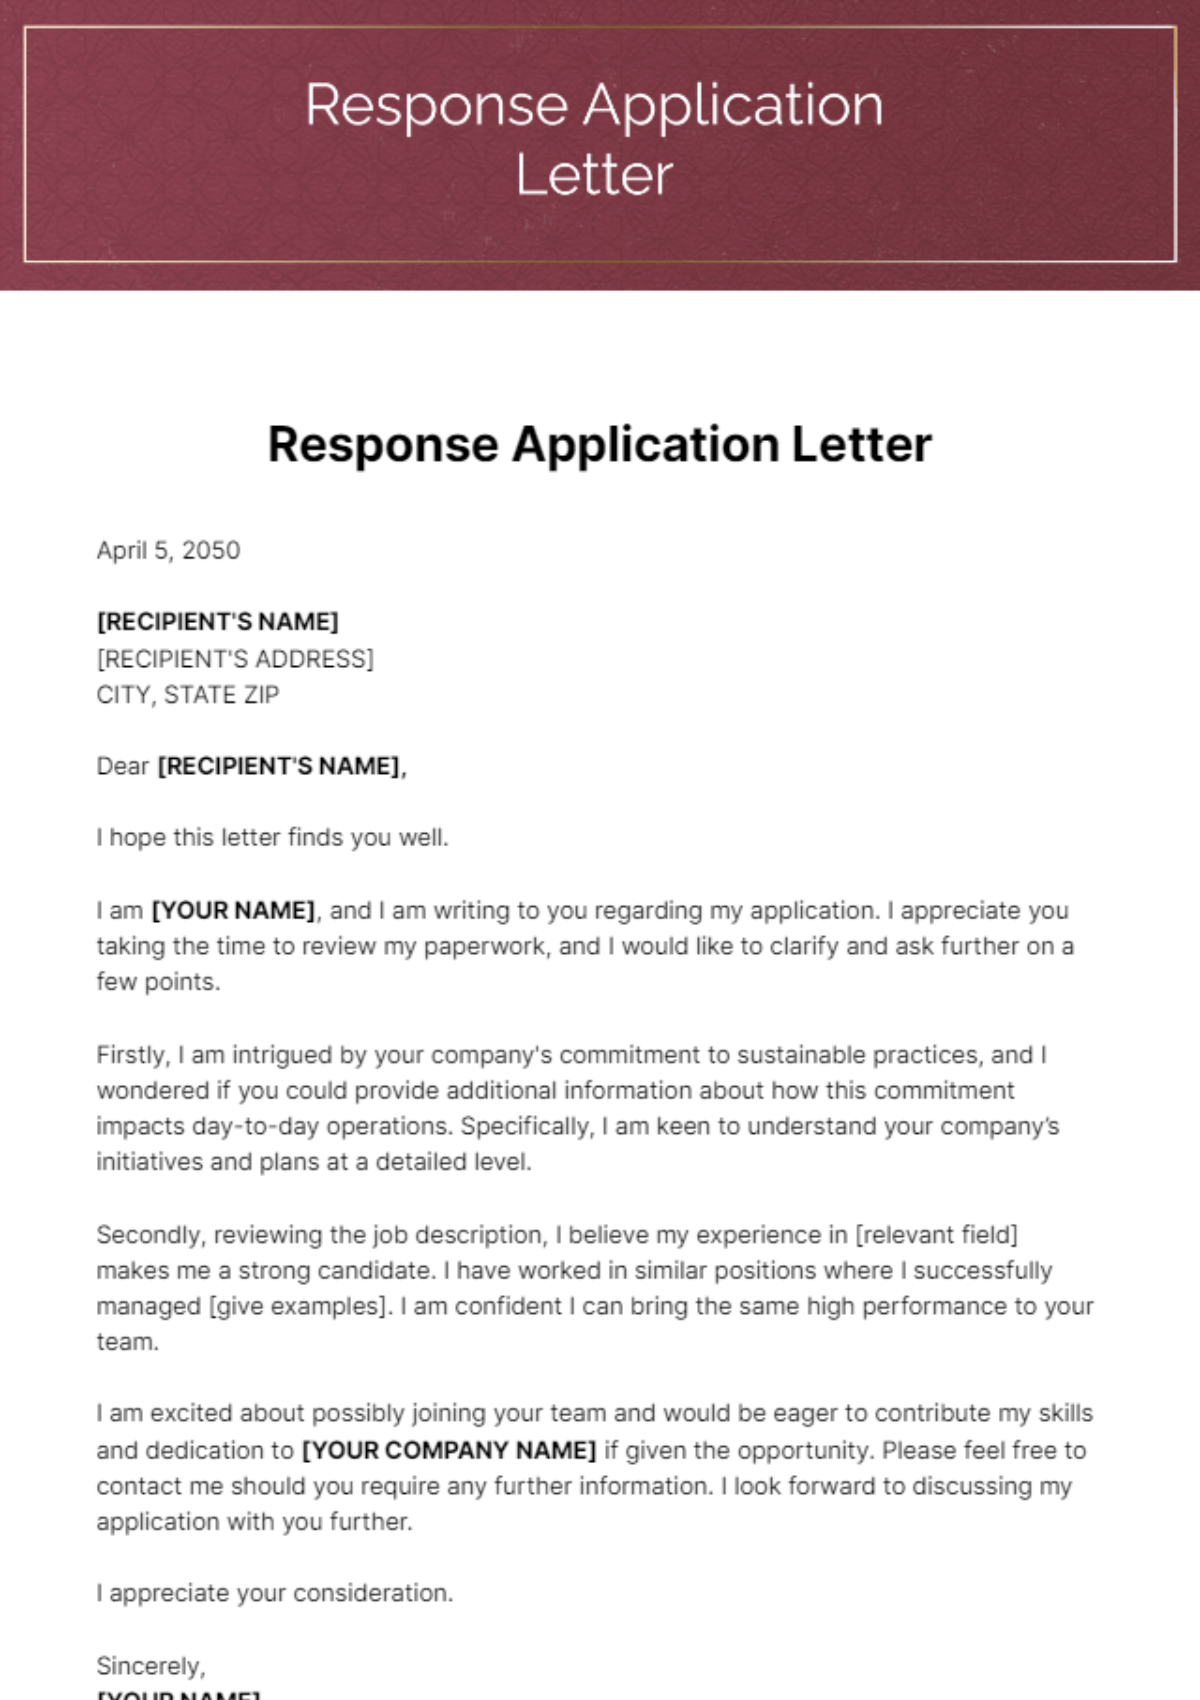 Response Application Letter Template